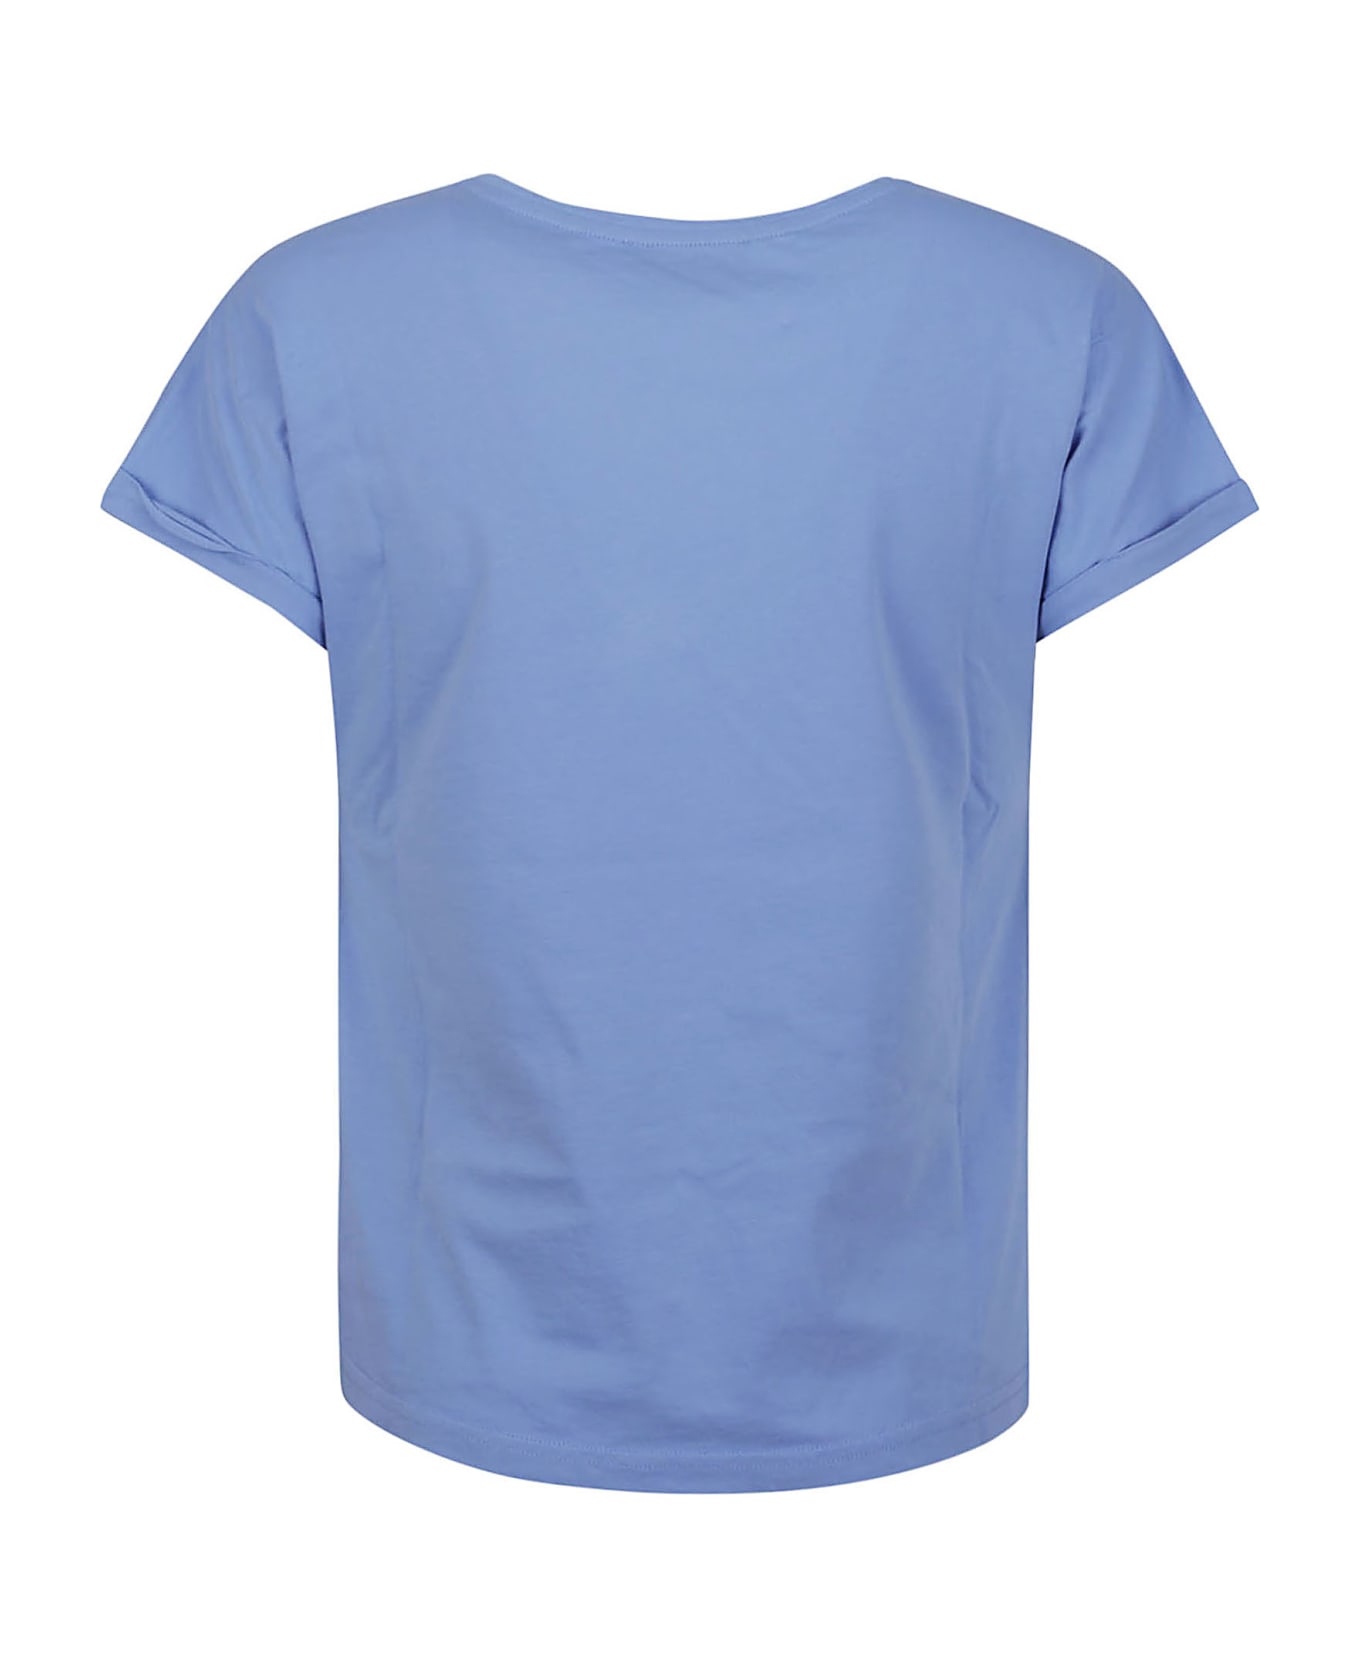 Maison Labiche T-shirts And Polos Clear Blue - Clear Blue